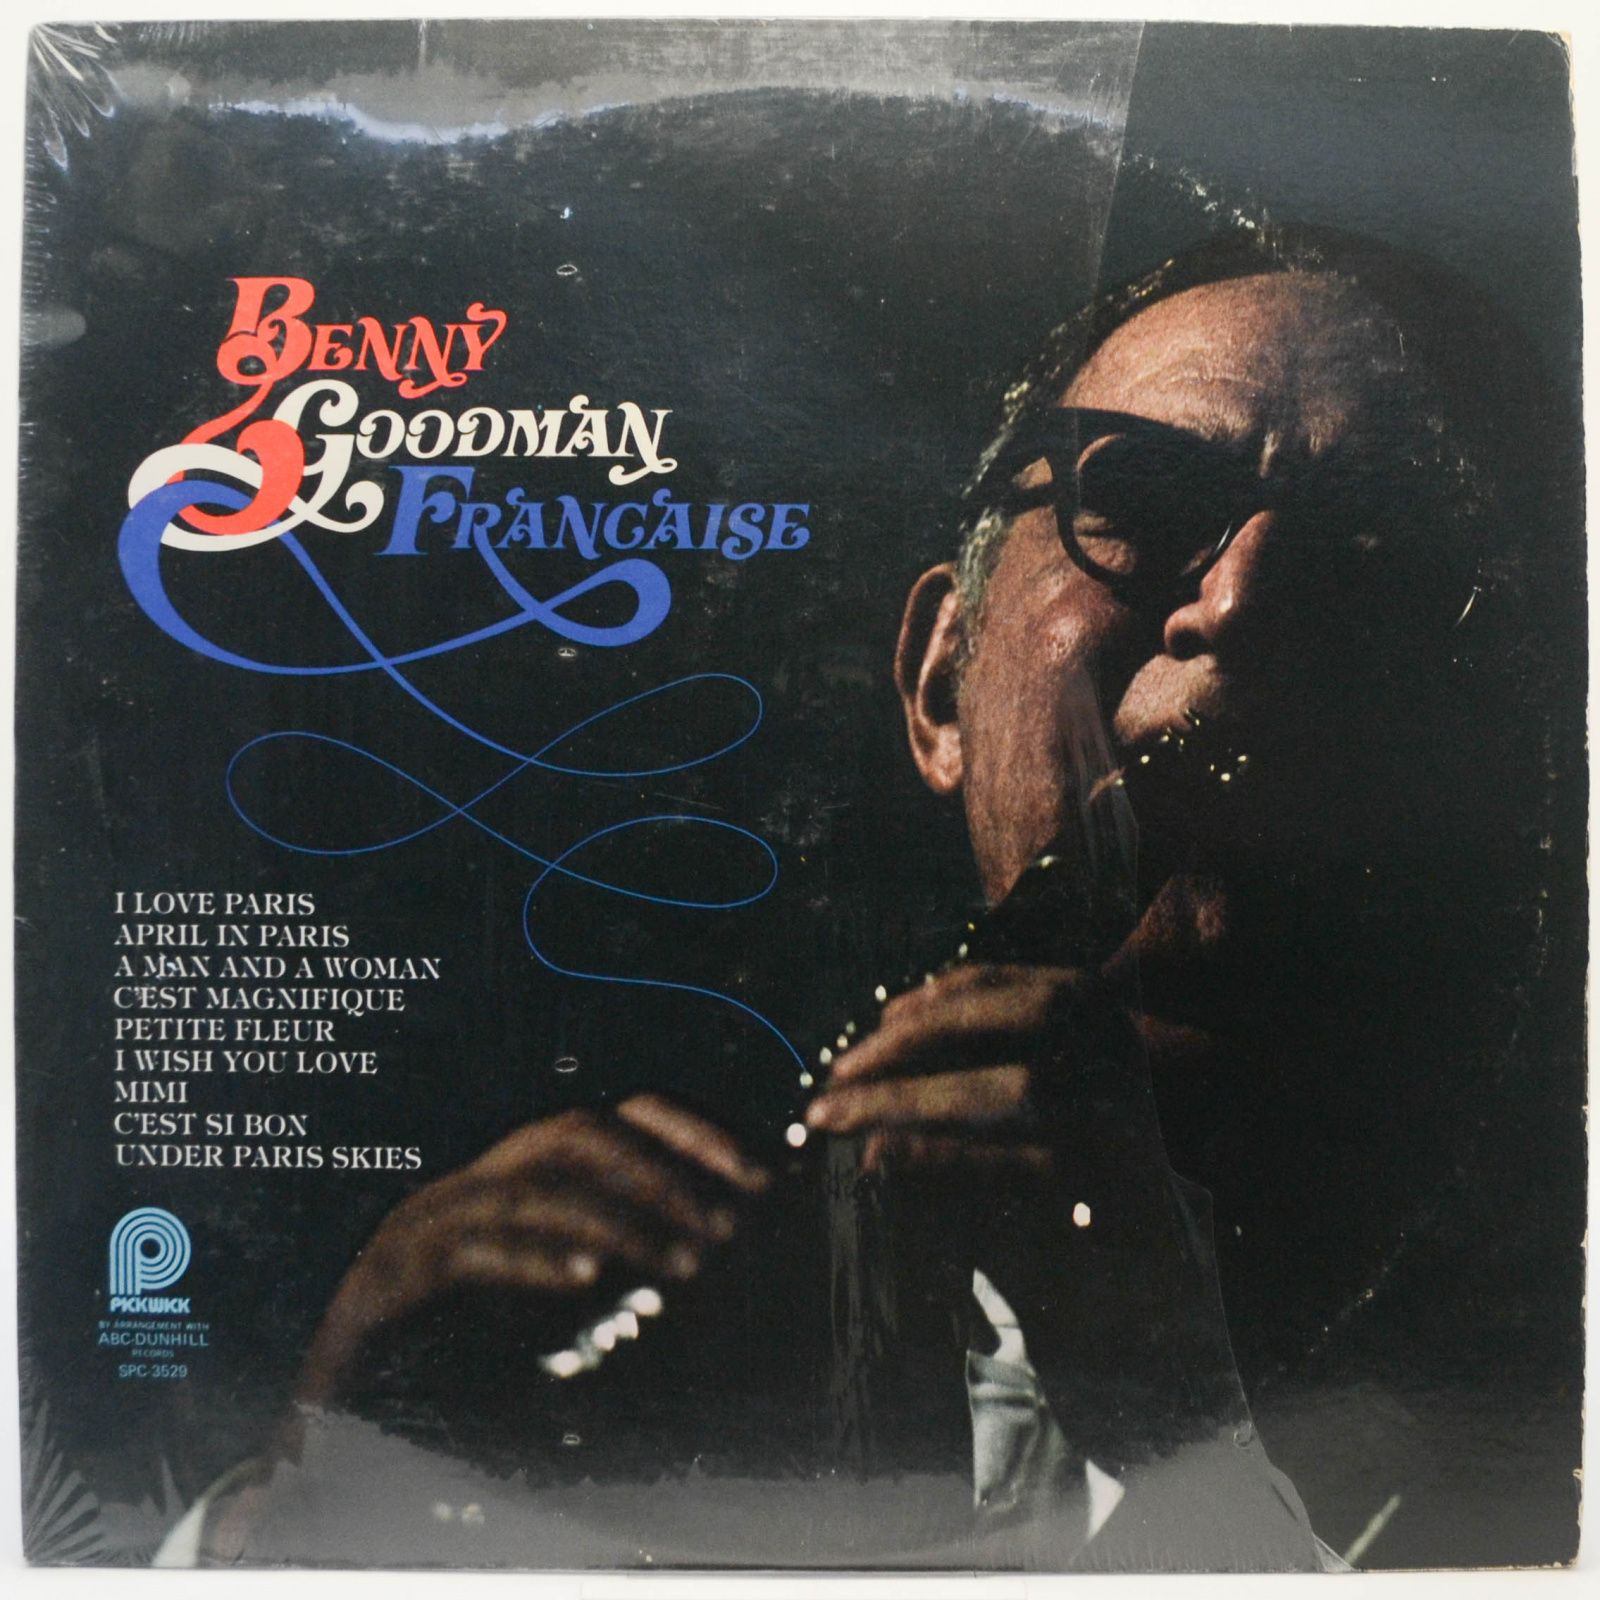 Benny Goodman — Francaise (USA), 1975